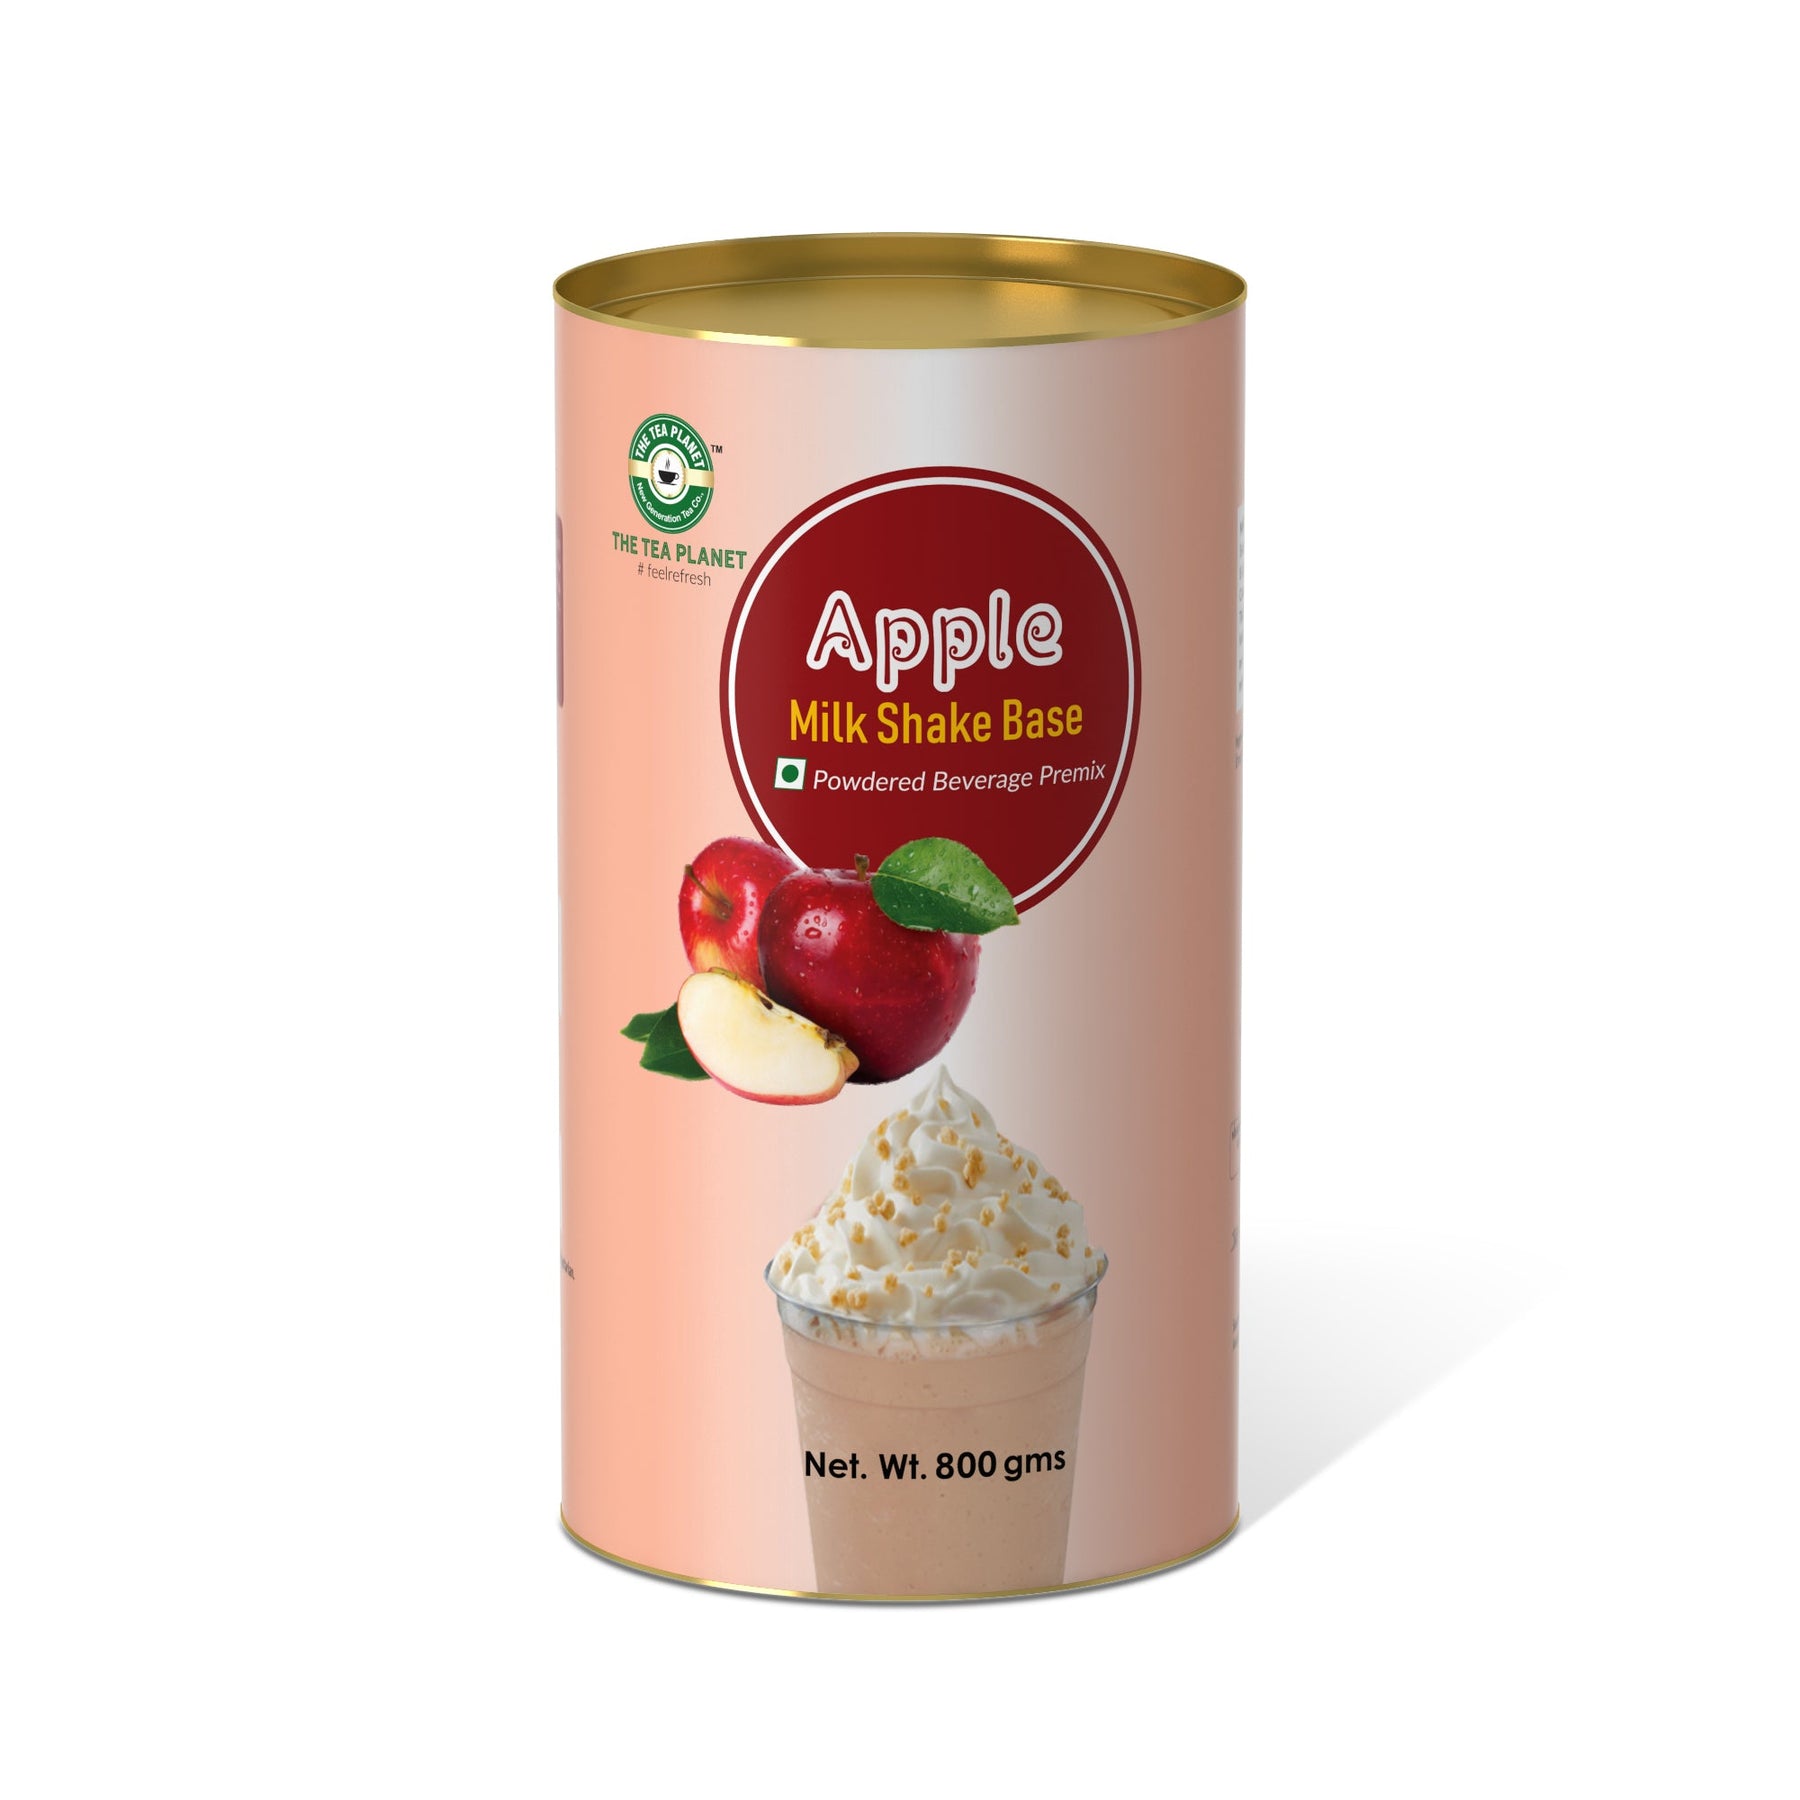 Apple Milkshake Mix - 250 gms